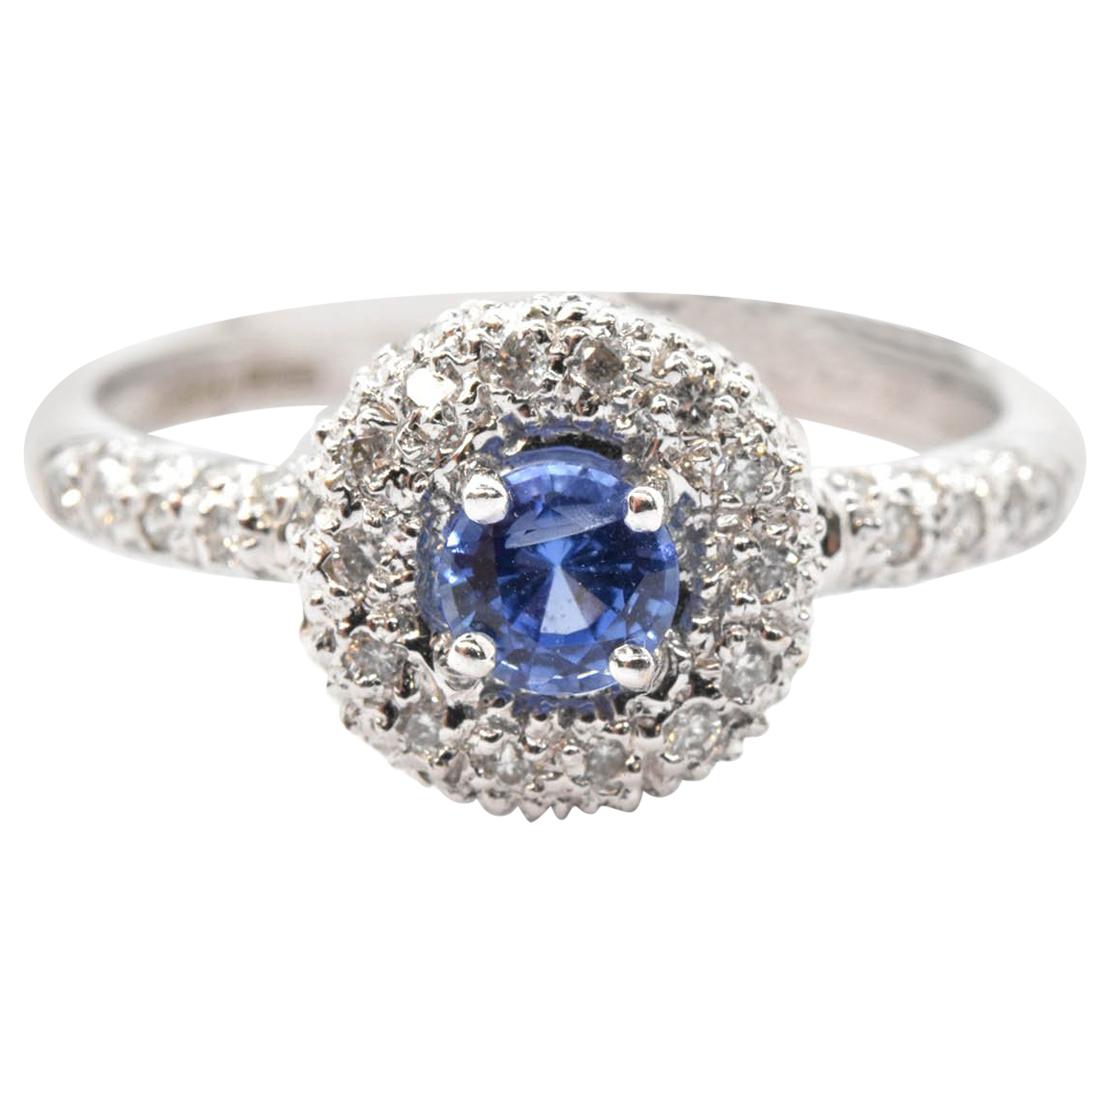 5.60 Carat Oval Blue Sapphire and Diamonds Fashion Ring in 18 Karat ...